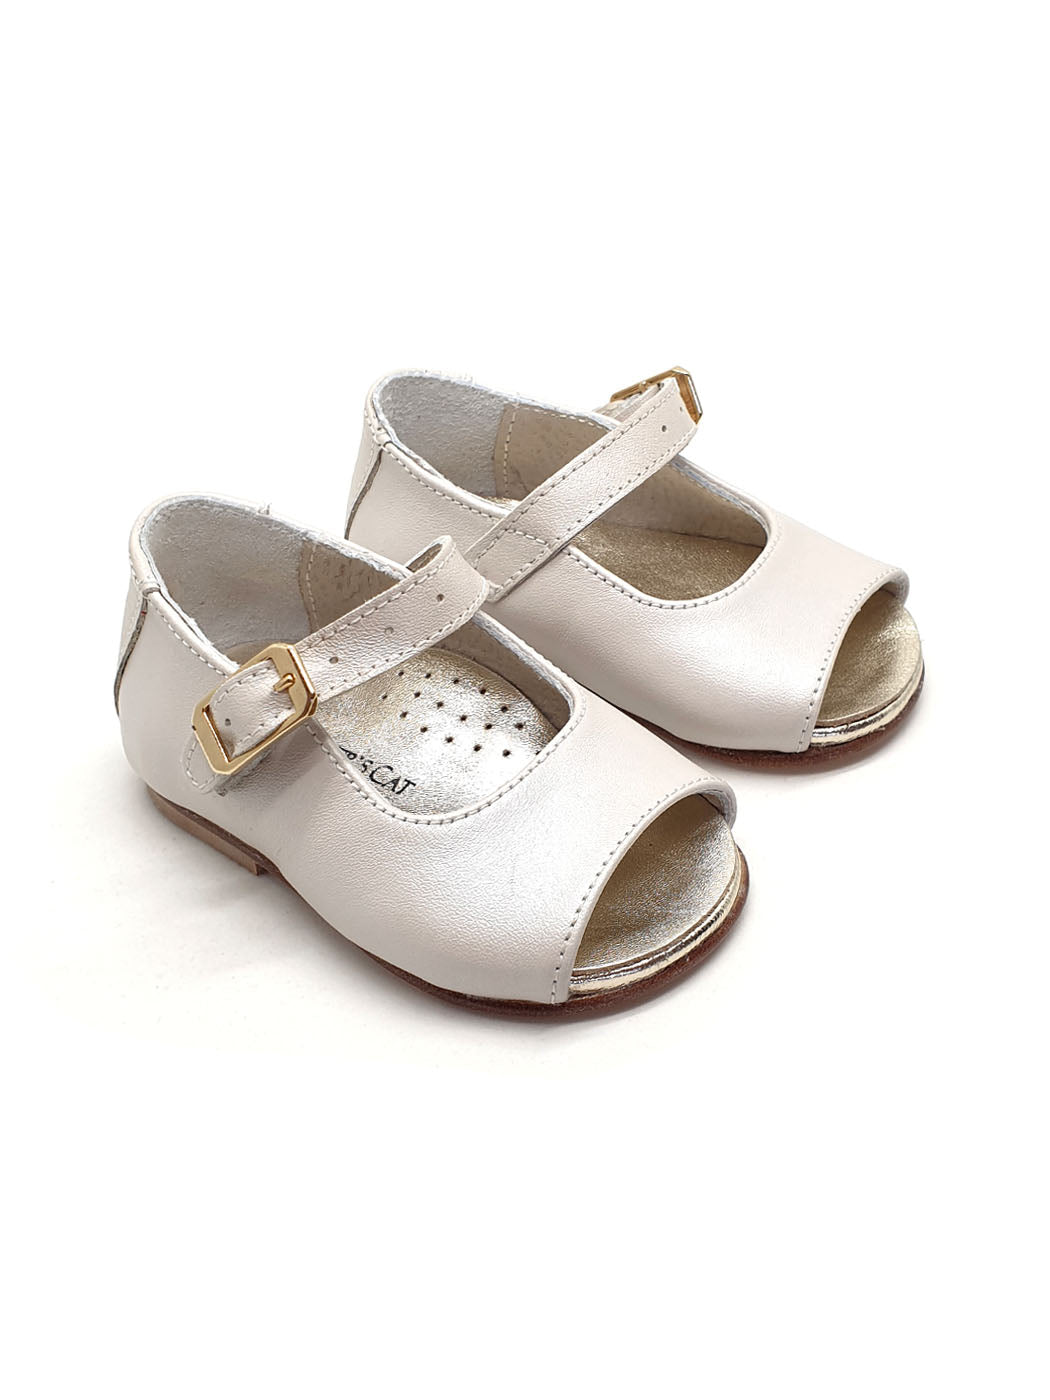 Baptismal baby leather shoe for girl - PEEP TOE Cream